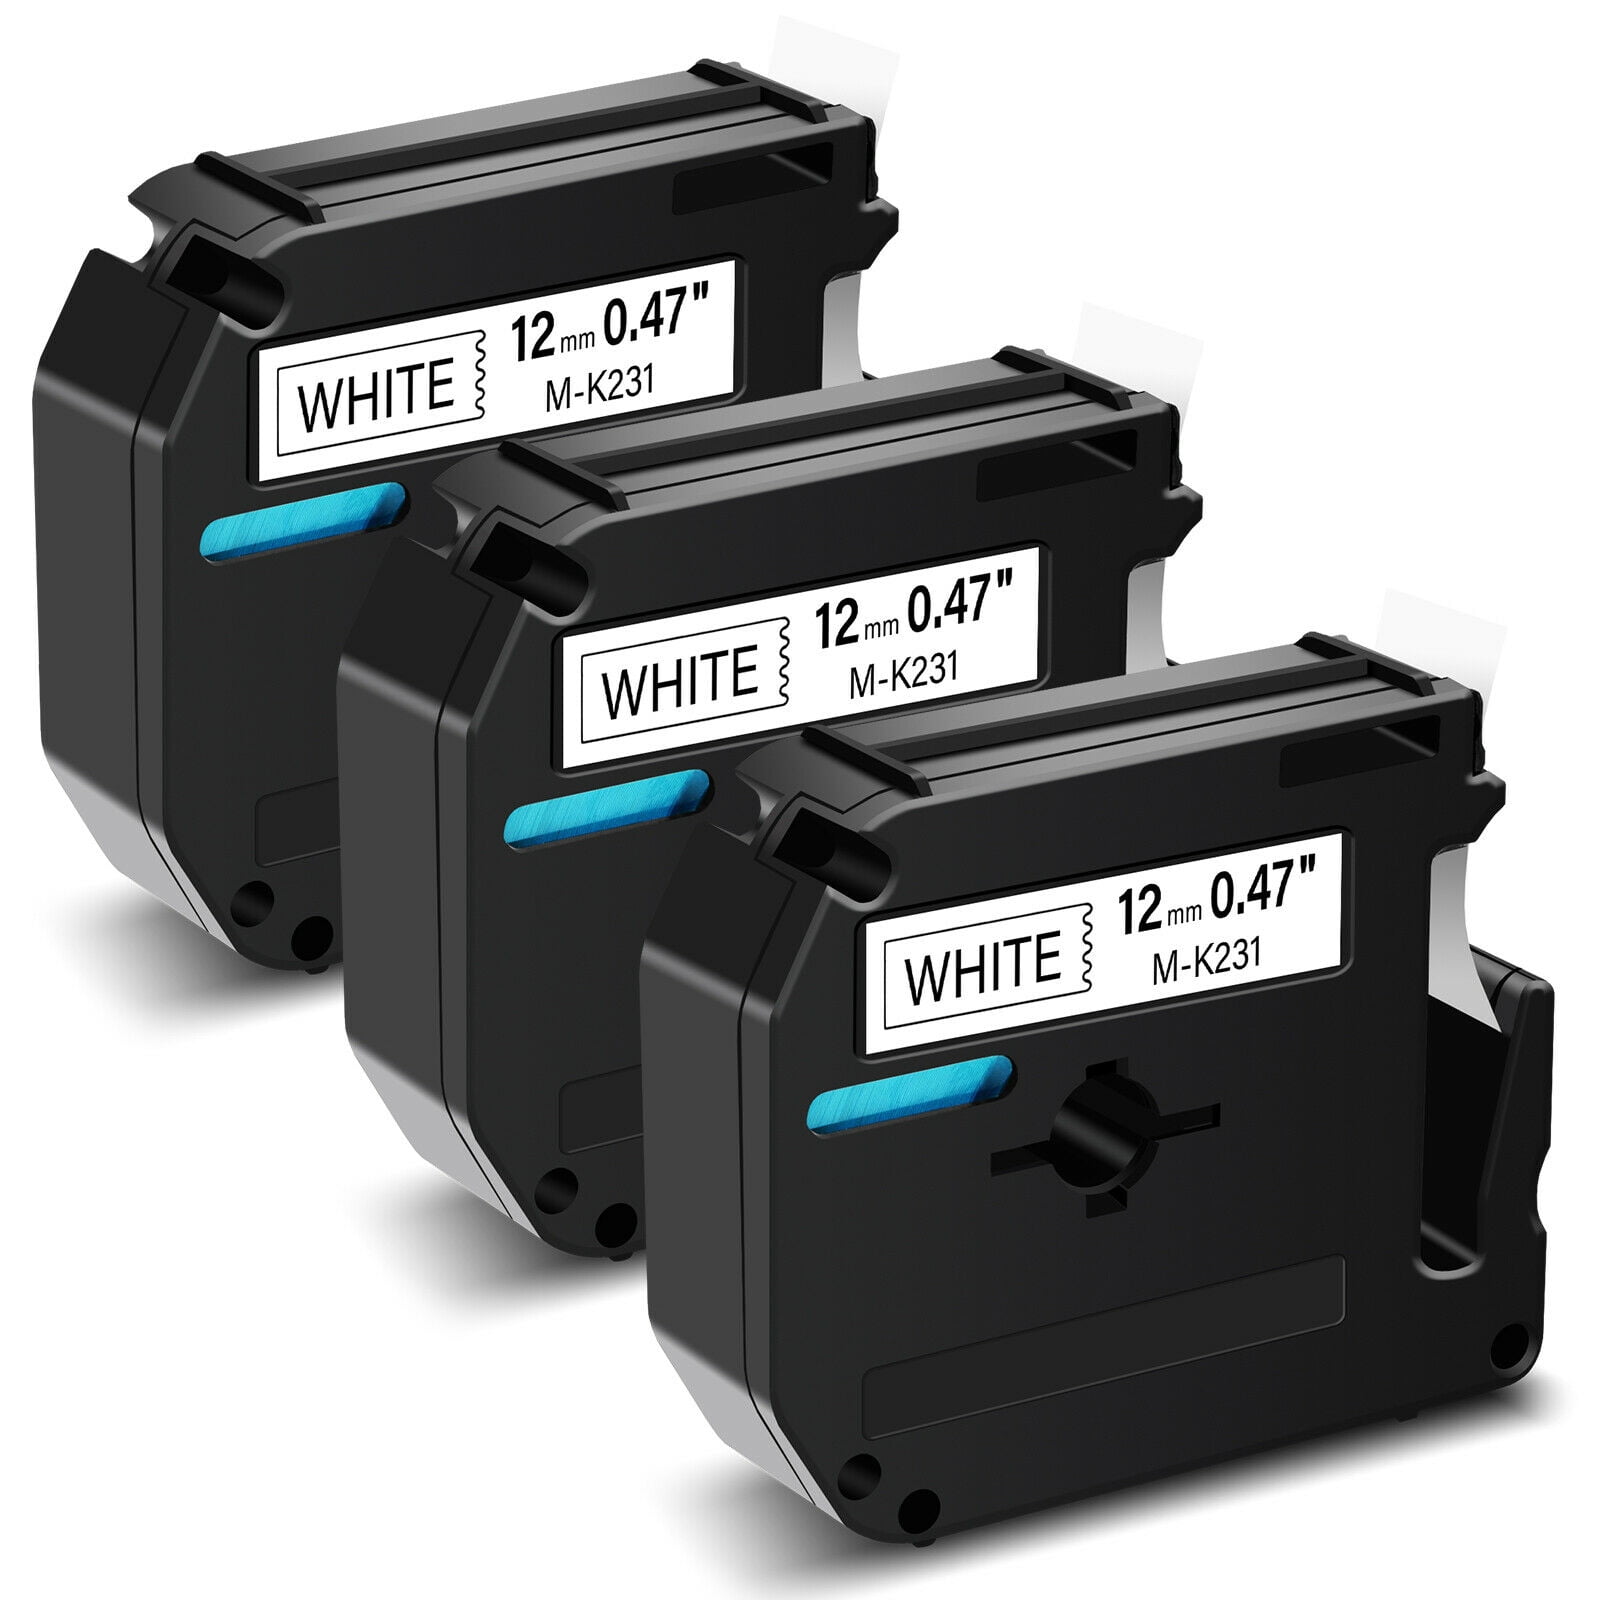 M-K231 MK231 Black on White Label Tape For Brother P-touch PT-100 PT55S PT80 